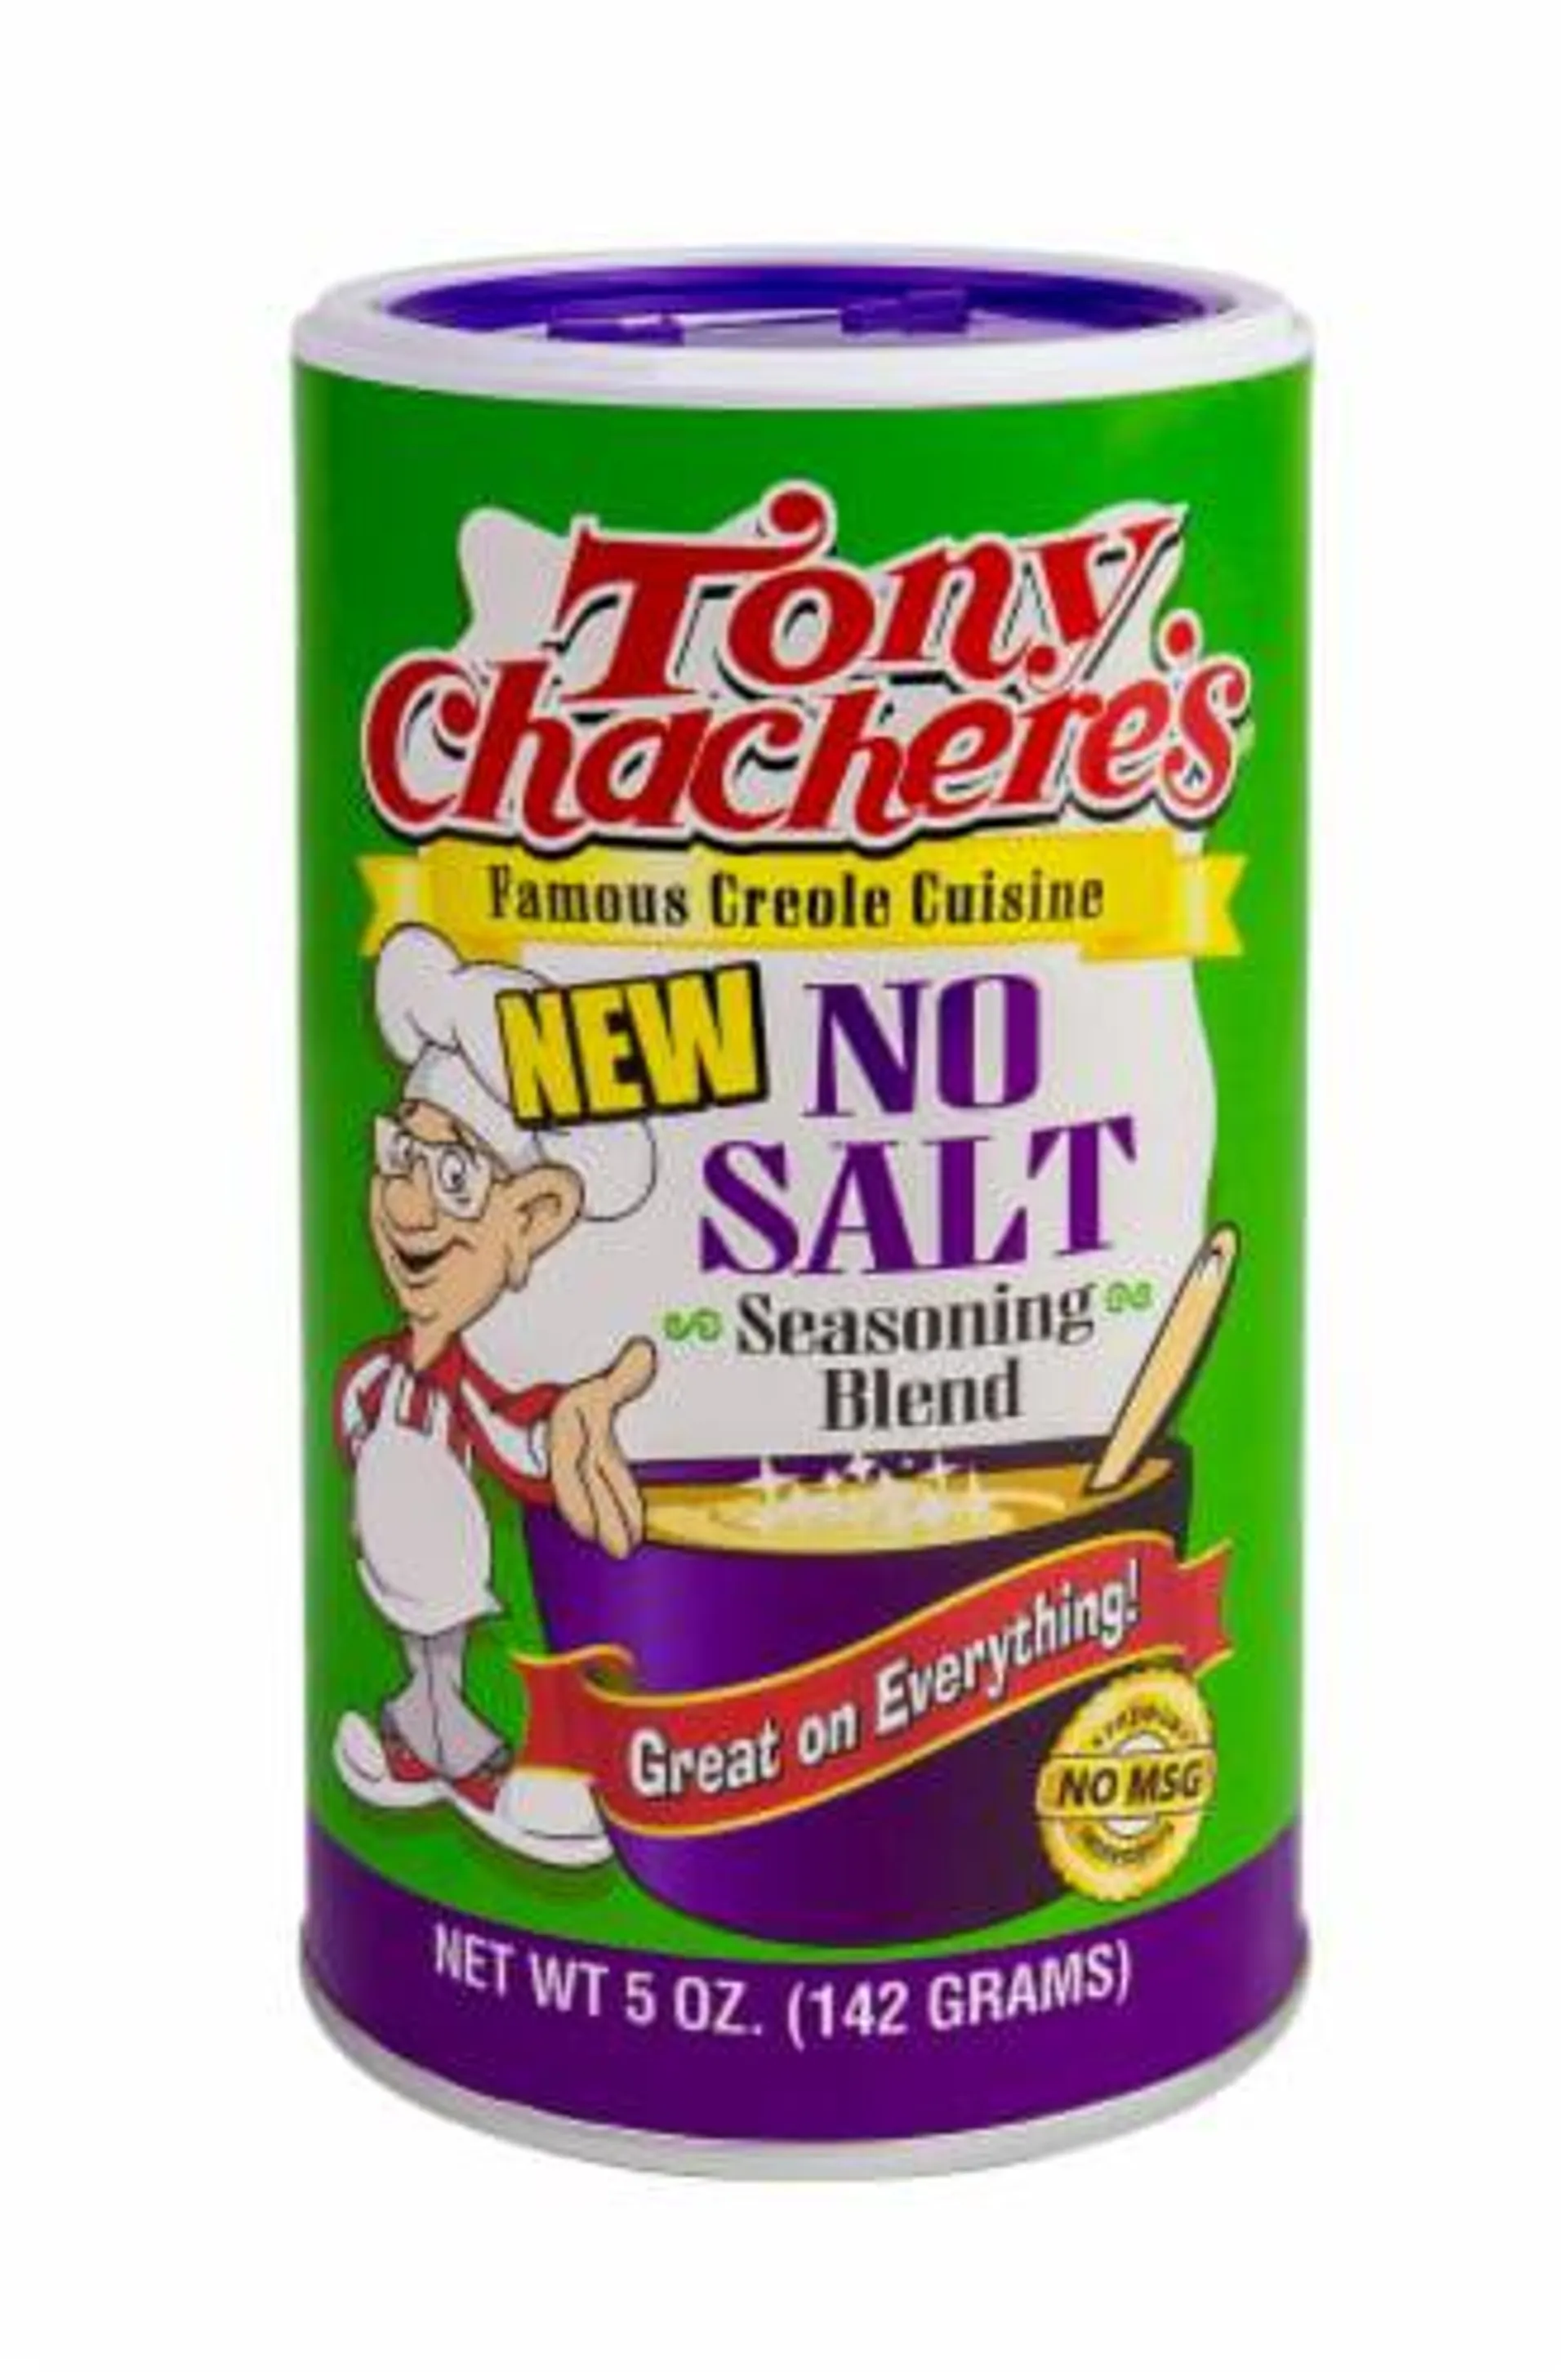 Tony Chachere's® No Salt Seasoning Blend